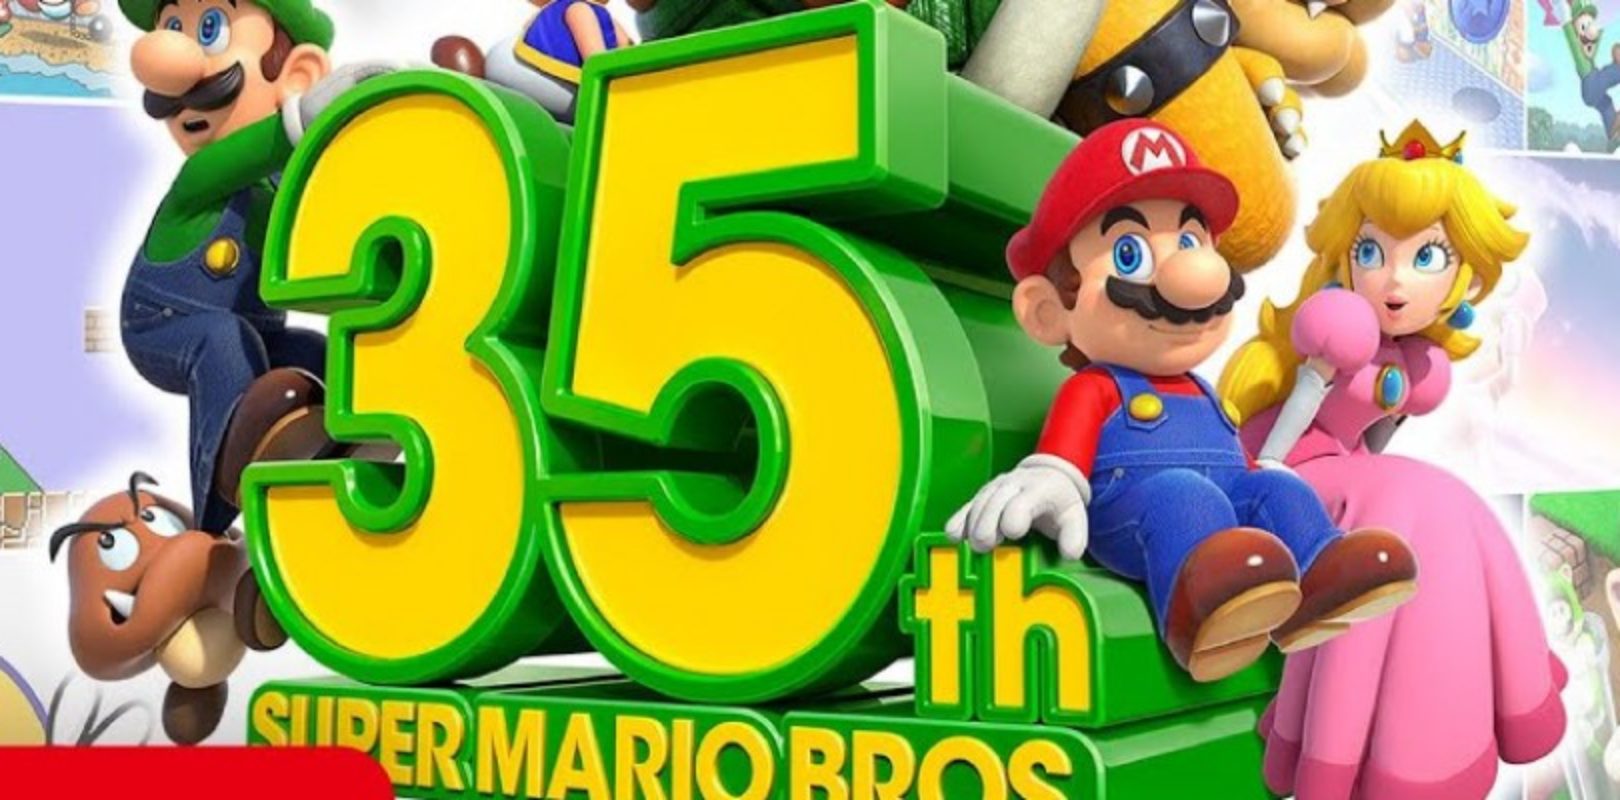 Mario Bros 35th Anniversary